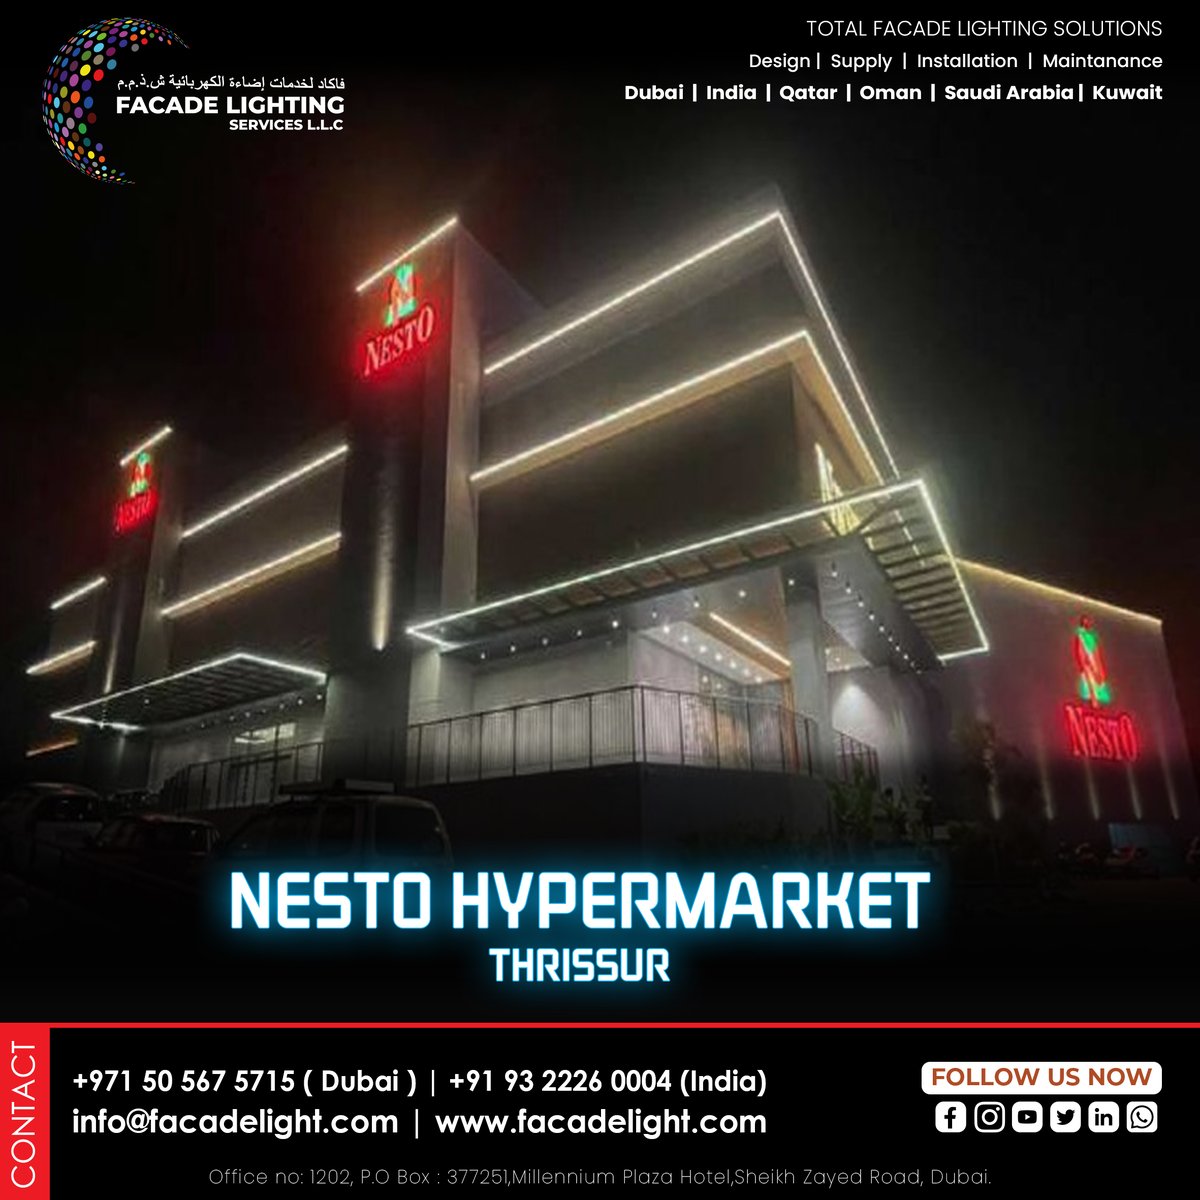 🌟 Lighting up Nesto Hypermarket in Thrissur! 🏬 

Contact @https://facadelight.com/

+971 50 567 5715 (Dubai)
+91 932 226 0004 (India)

#facadelighting #lightingmanufacturer #lightinginstallation #facadelightingservices #nestohypermarket #facadedesign #exteriorlighting #dubai